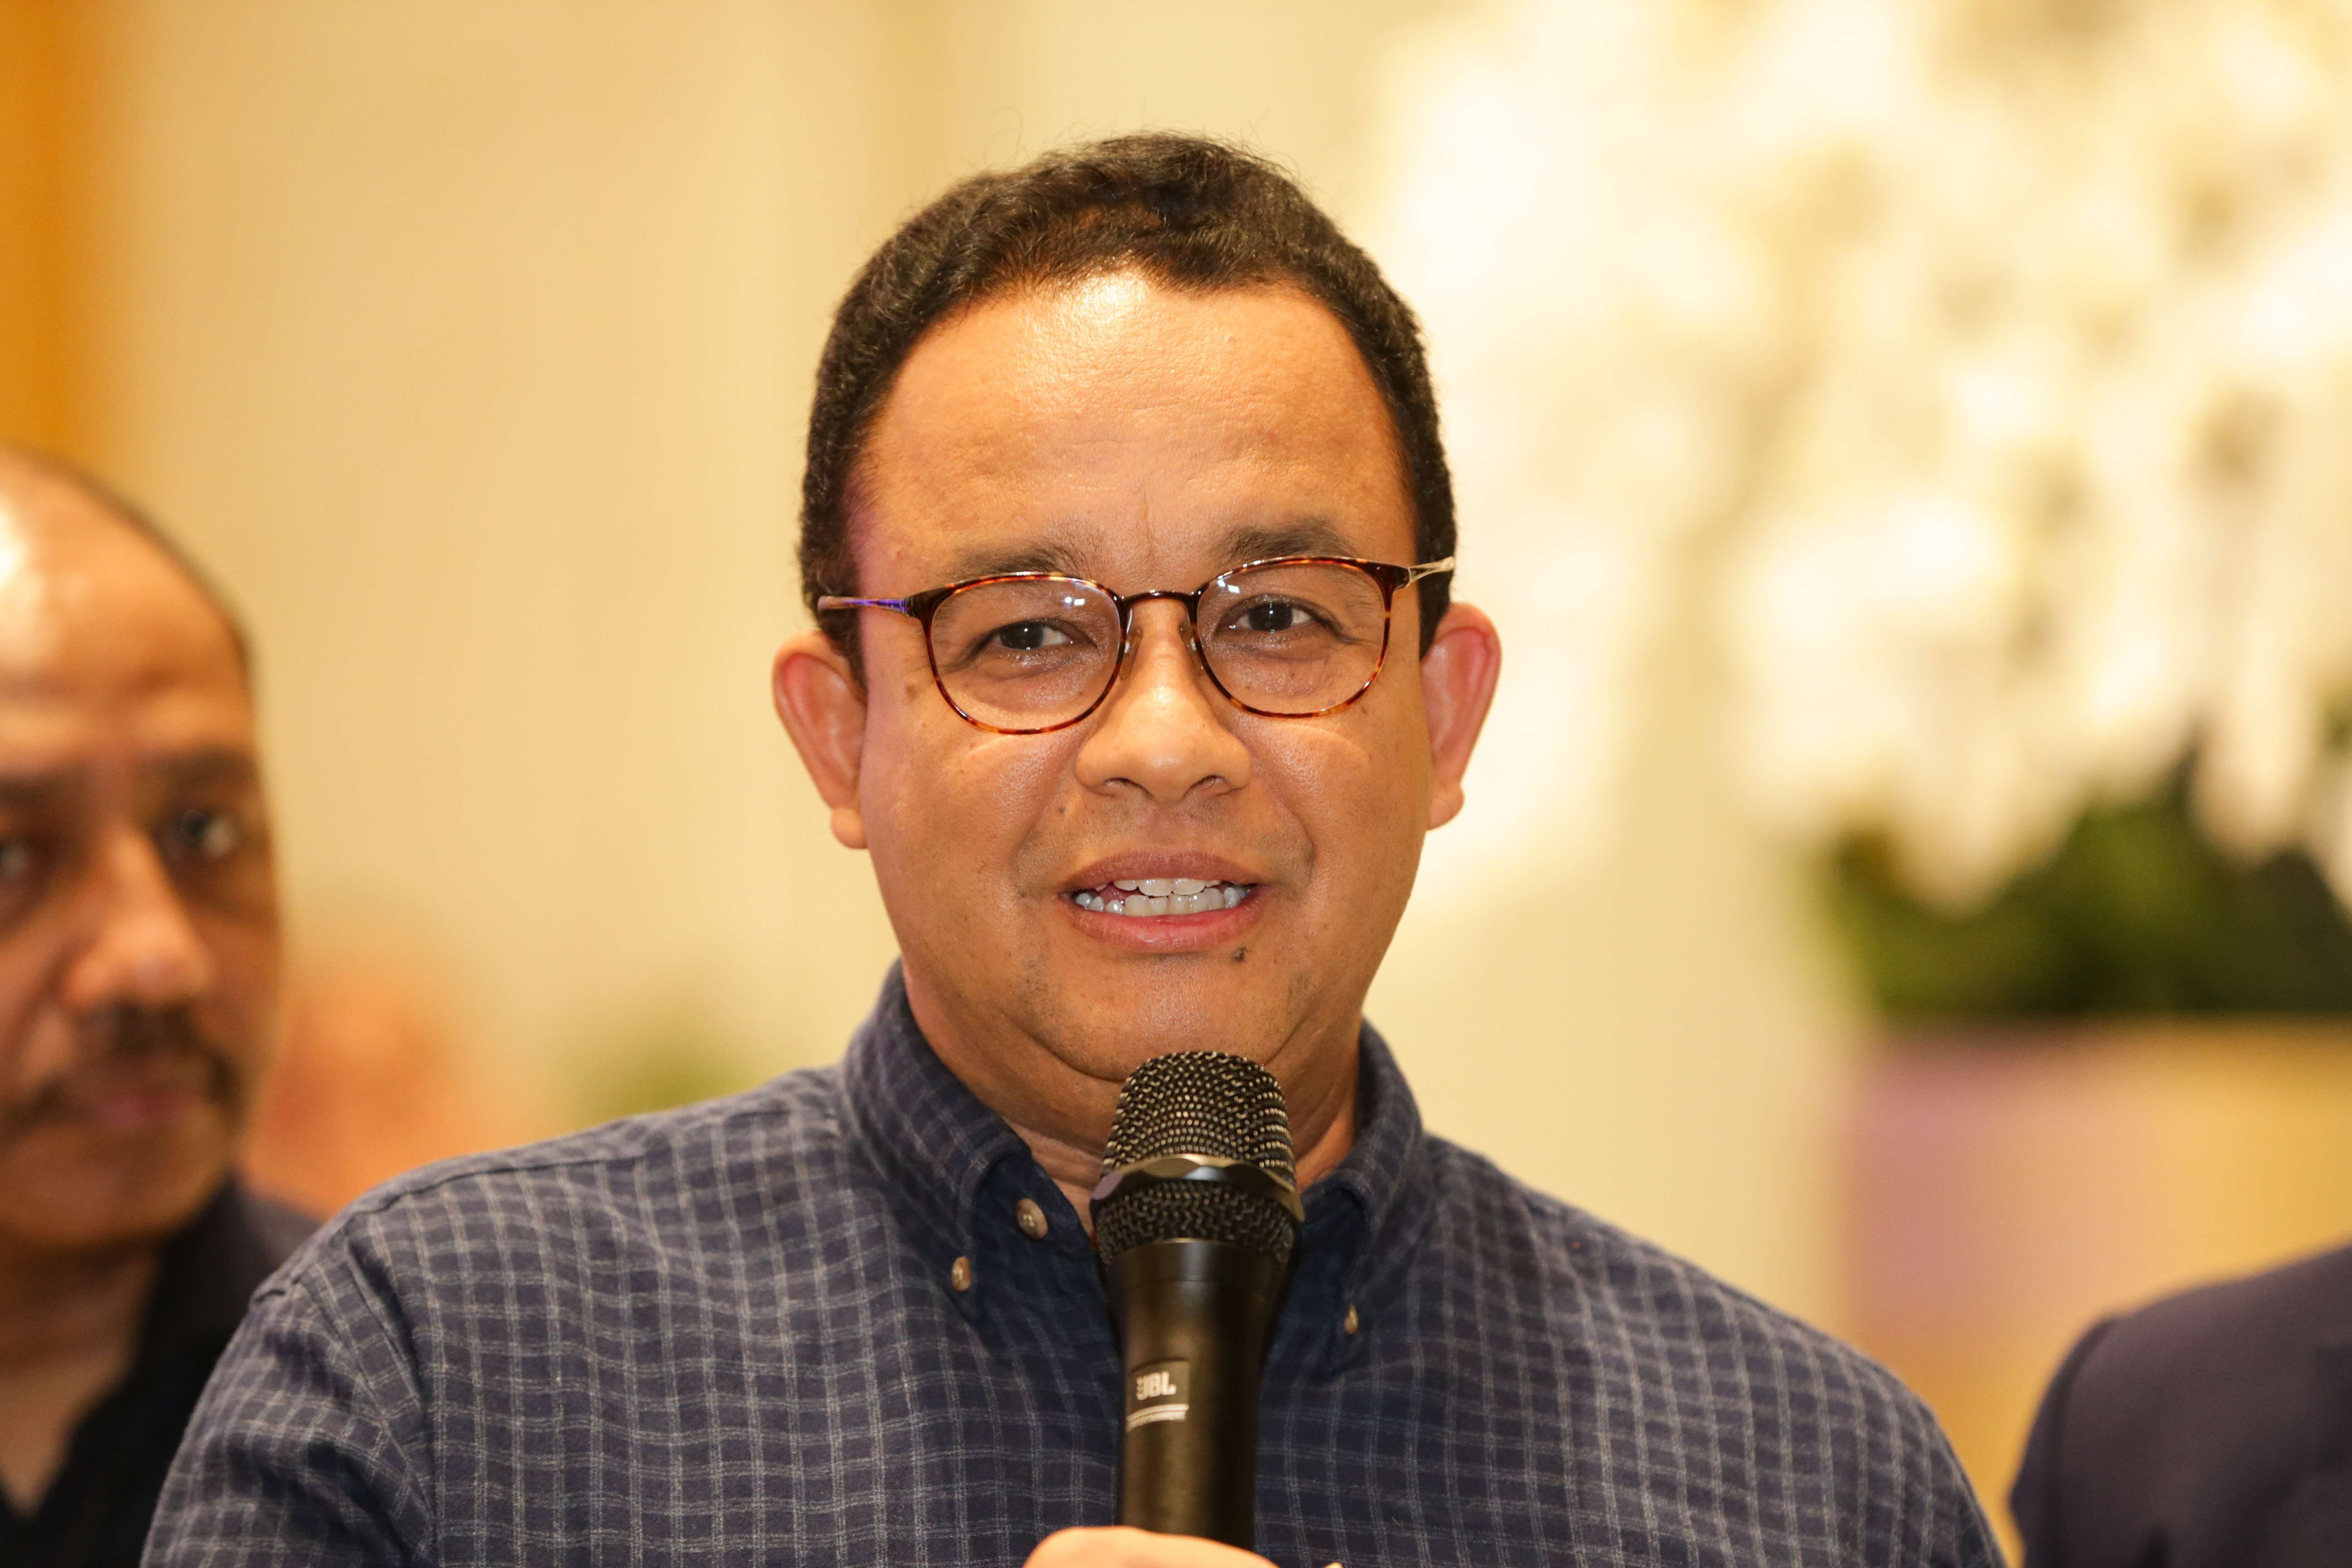 Survei LSI Denny JA: Elektabilitas Anies Lemah di Jateng dan Jatim